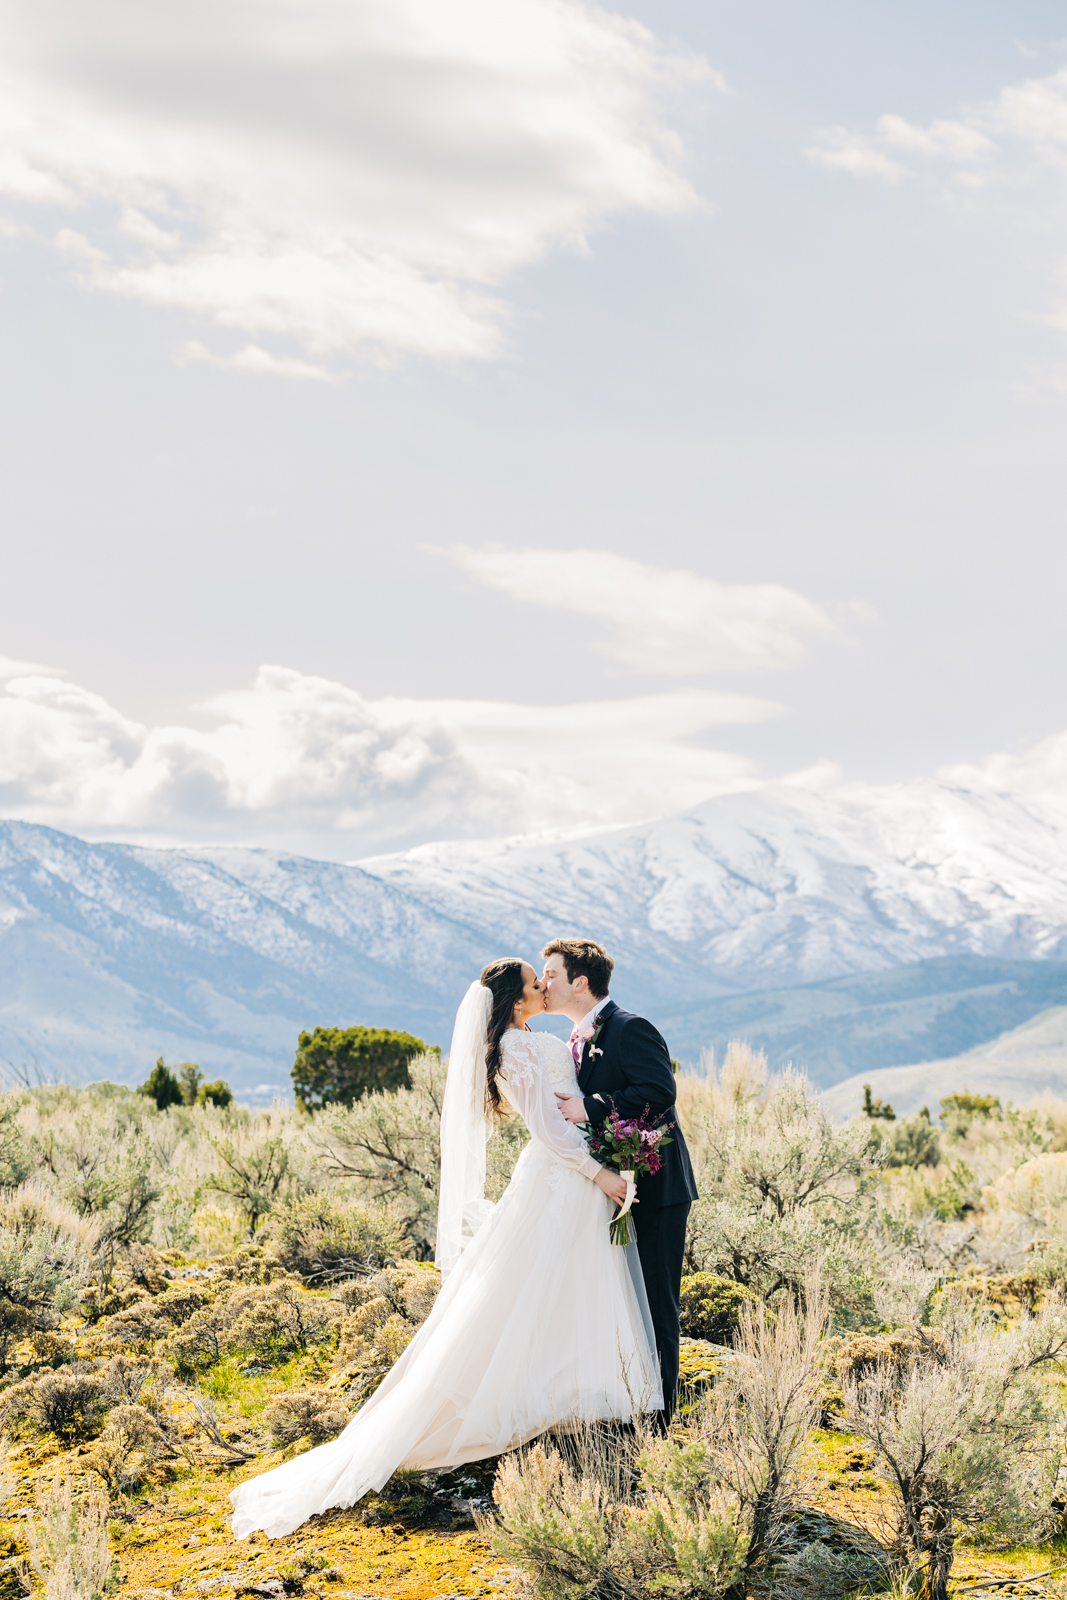 Jackson Hole wedding photographers capture ethereal kiss in mountians